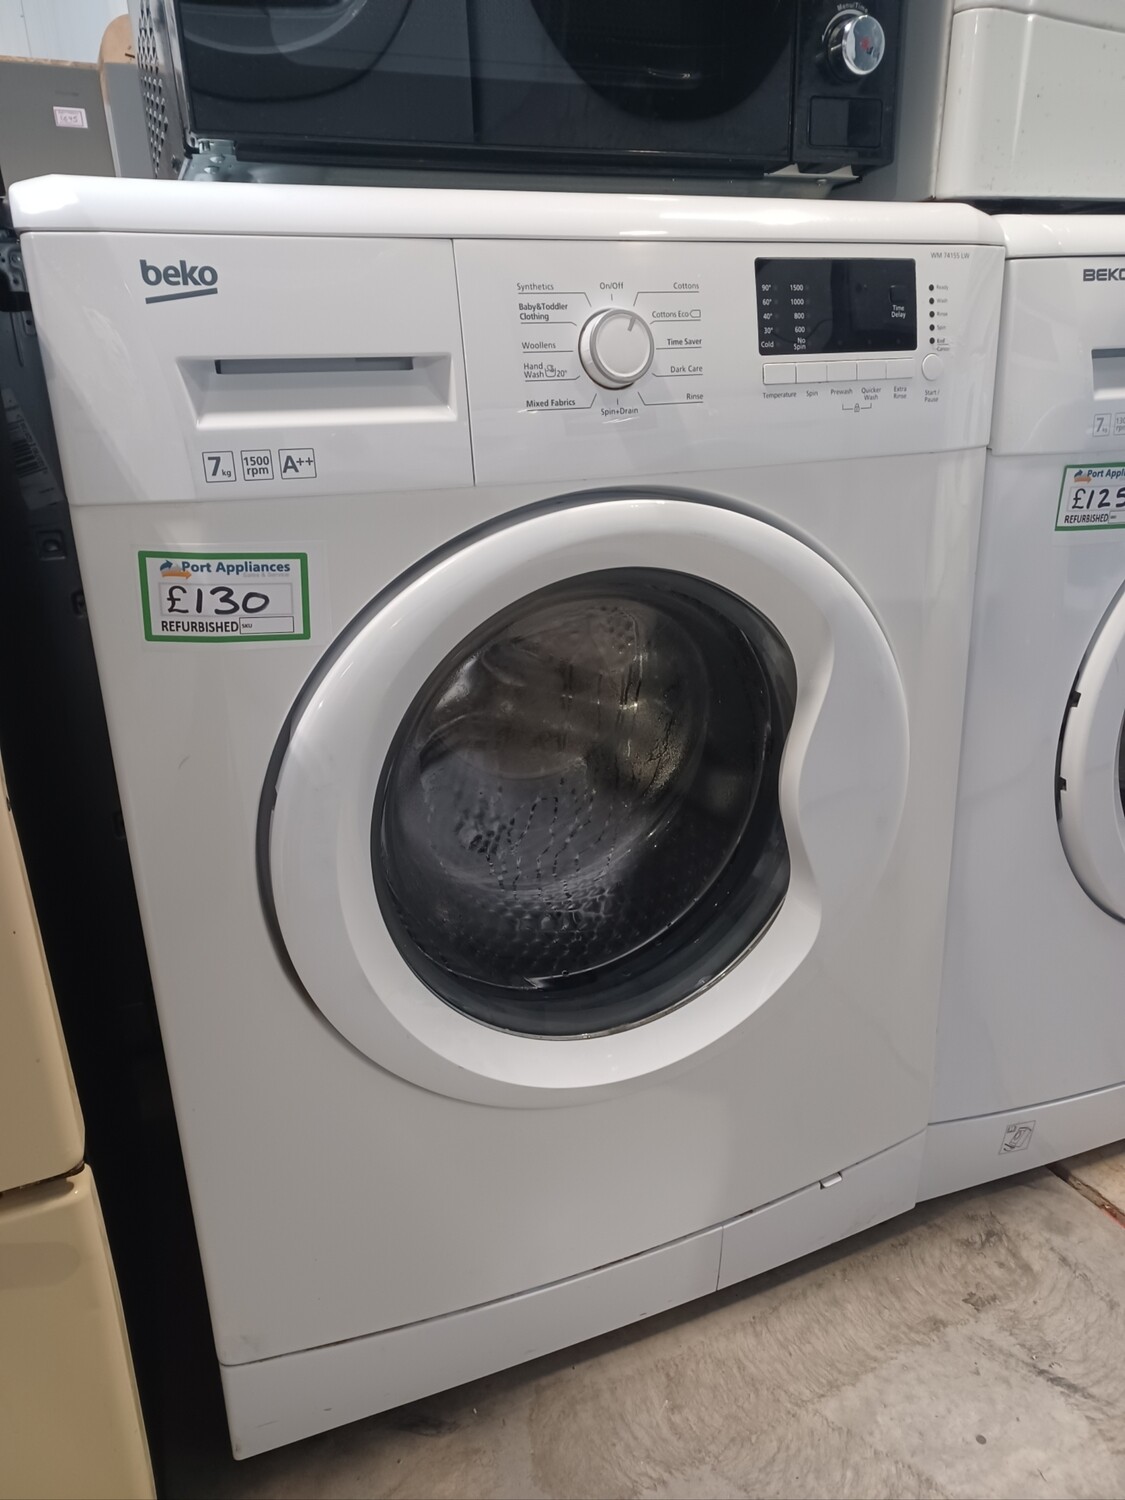 Beko WMB74155LW A++ 7kg Load, 1500 Spin Washing Machine - White - Refurbished - 6 Month Guarantee